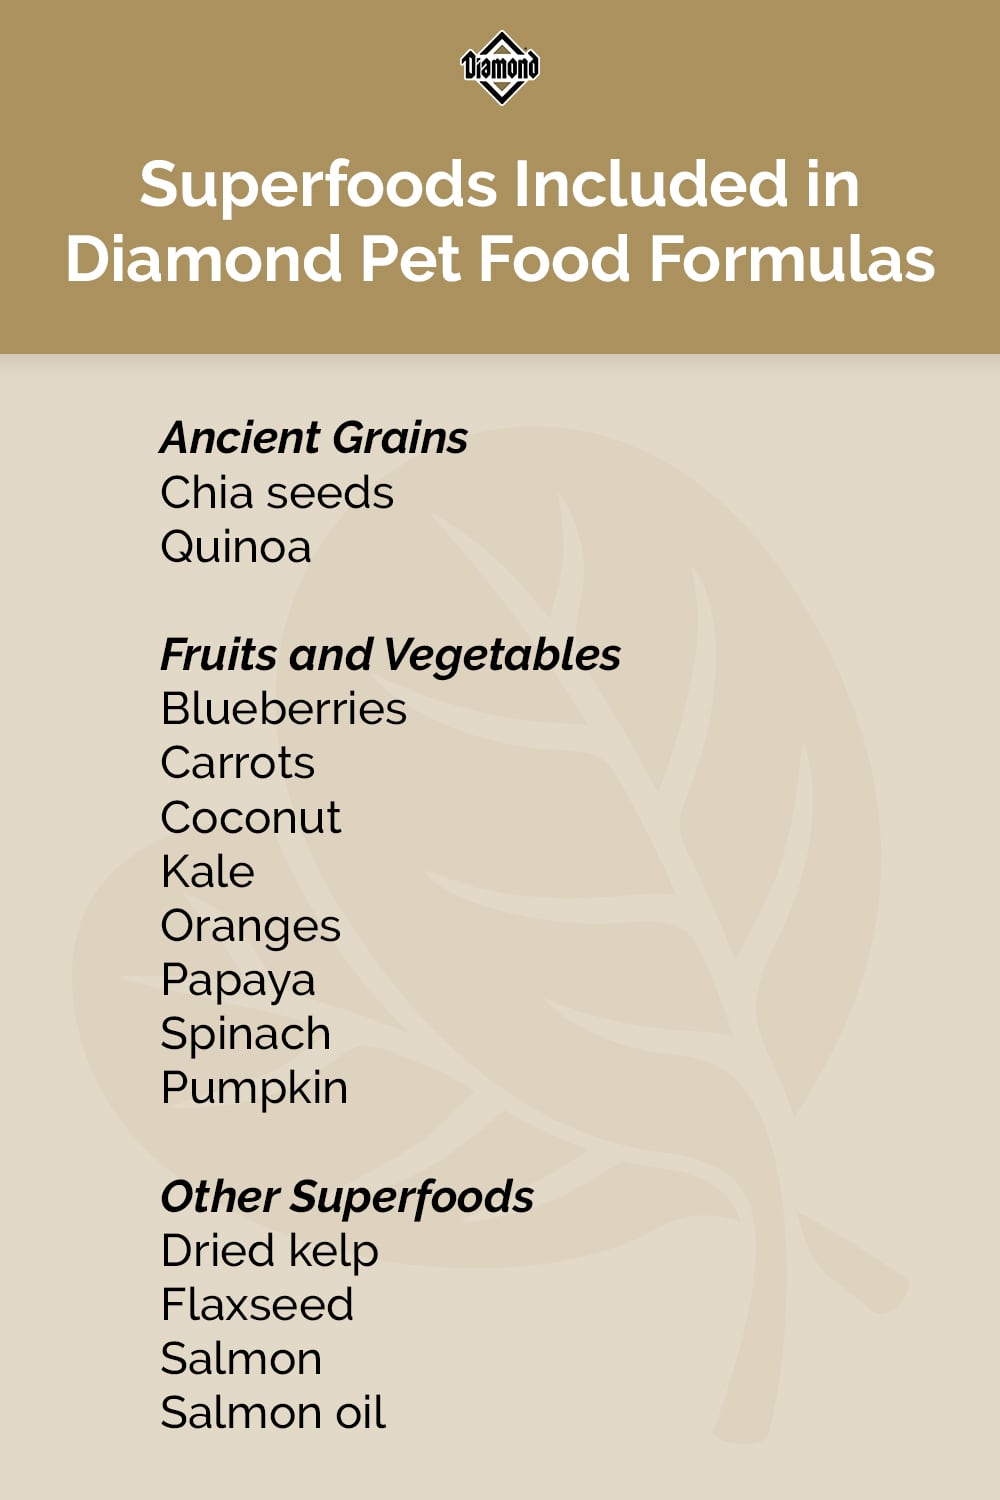 List of superfoods in Diamond Pet Formulas